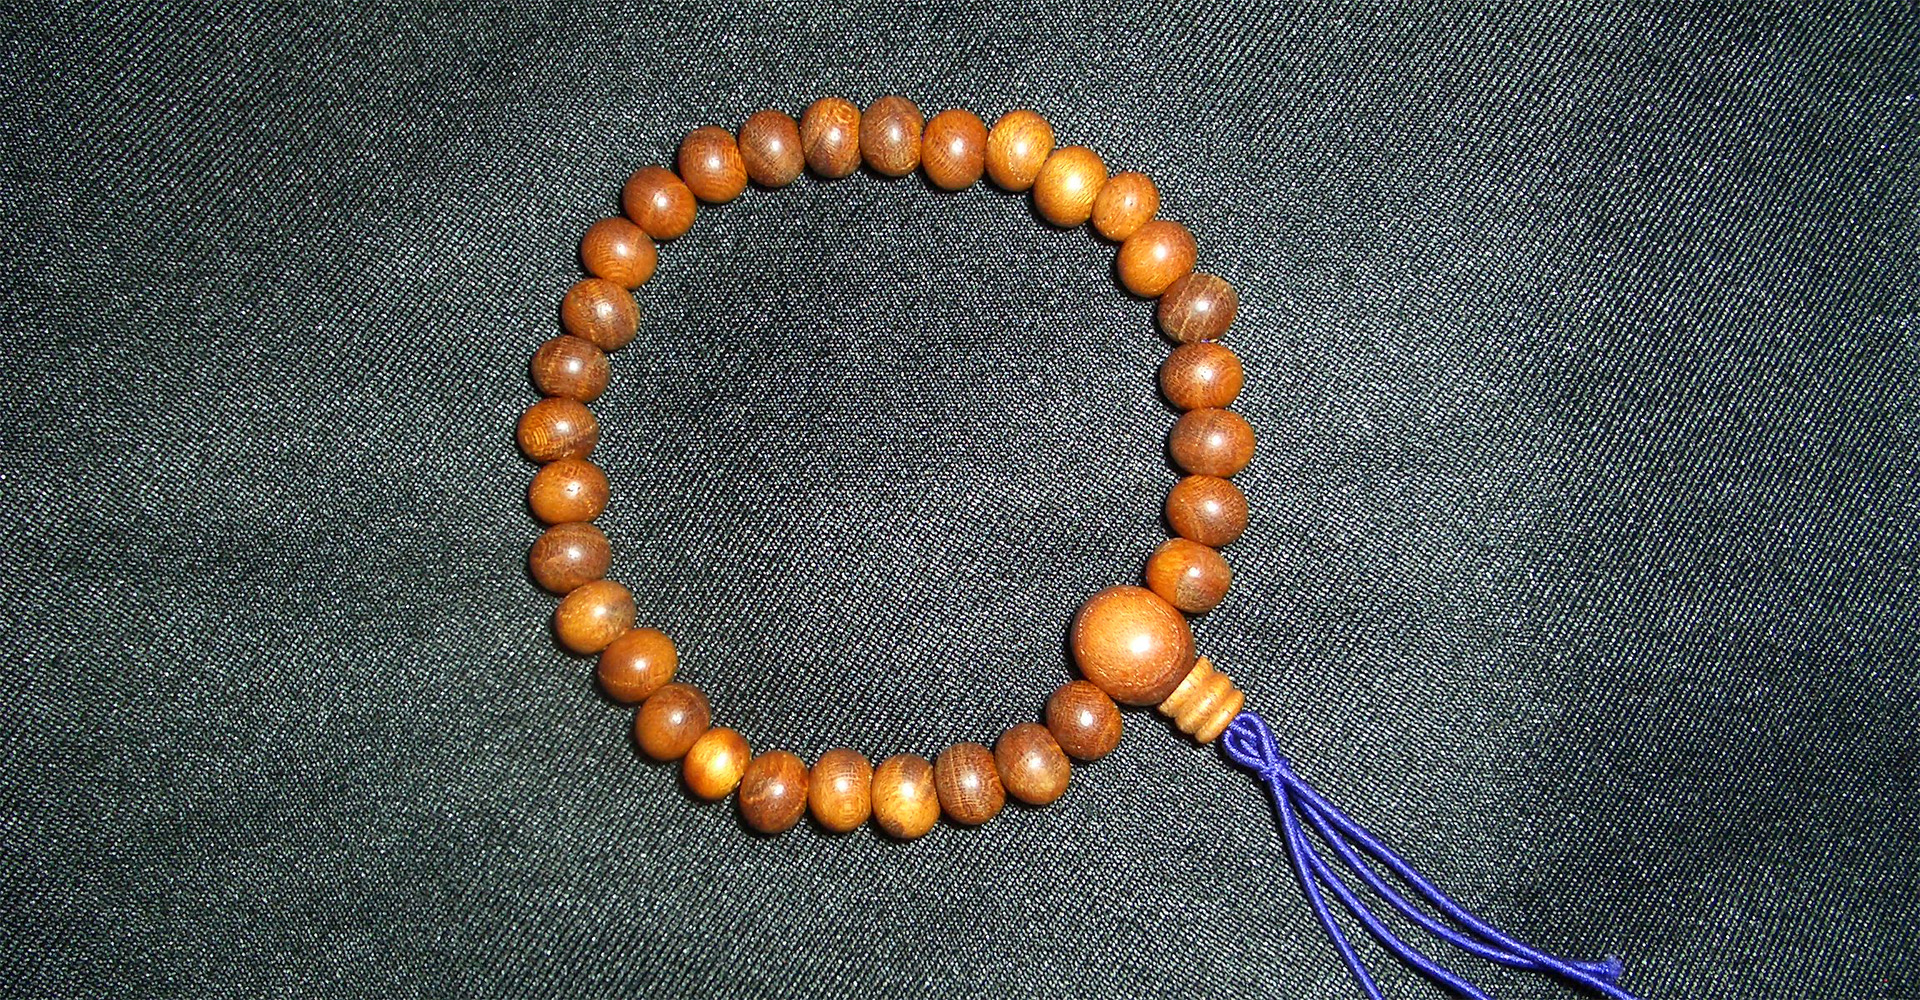 Buy Jovivi 108 Mala Prayer Beads Necklace 8mm Natural Indian Agate Gemstone  Healing Crystal Stone Strech Bracelets at Amazon.in